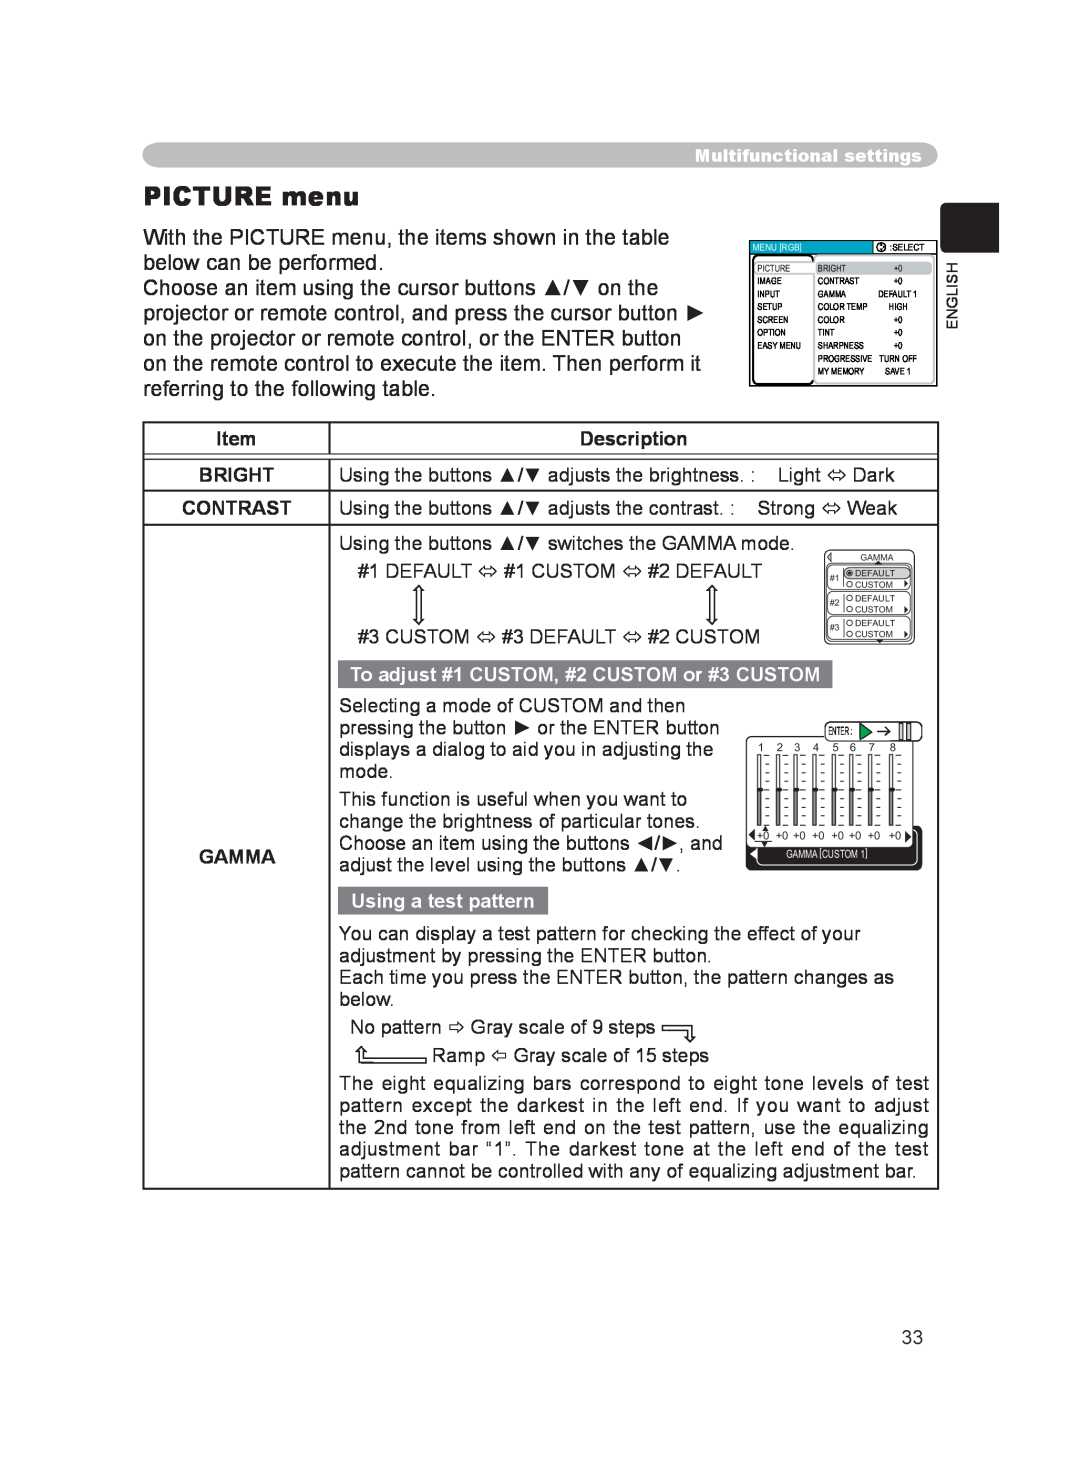 Hitachi EDPJ32 user manual PICTURE menu, To adjust #1 CUSTOM, #2 CUSTOM or #3 CUSTOM, Using a test pattern 